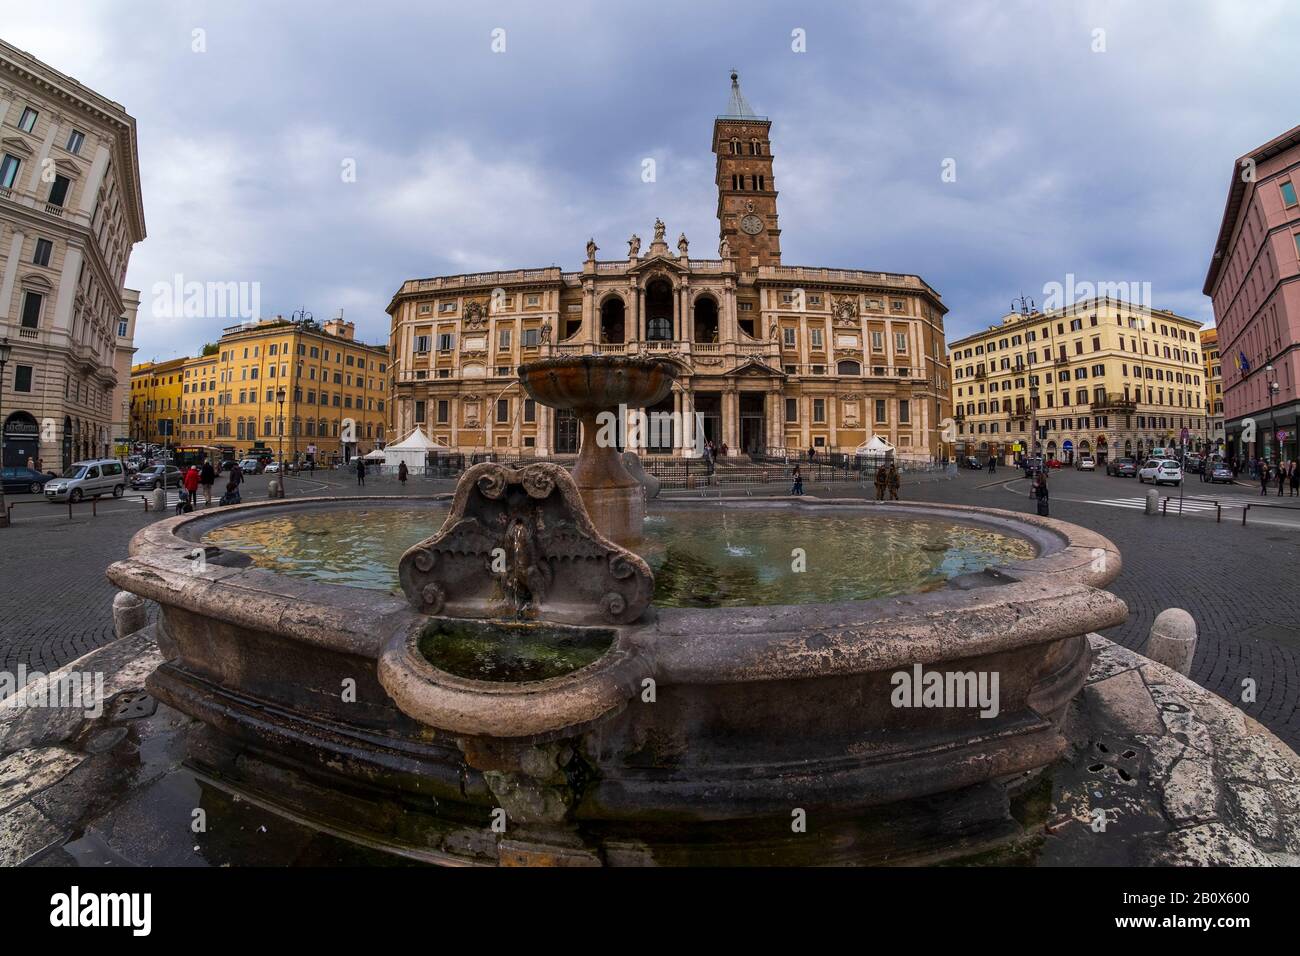 Die Fontana di Santa Maria Maggiore (Vorderseite) und die Basilika Papale di Santa Maria Maggiore (Rückseite), Rom, Italien Stockfoto